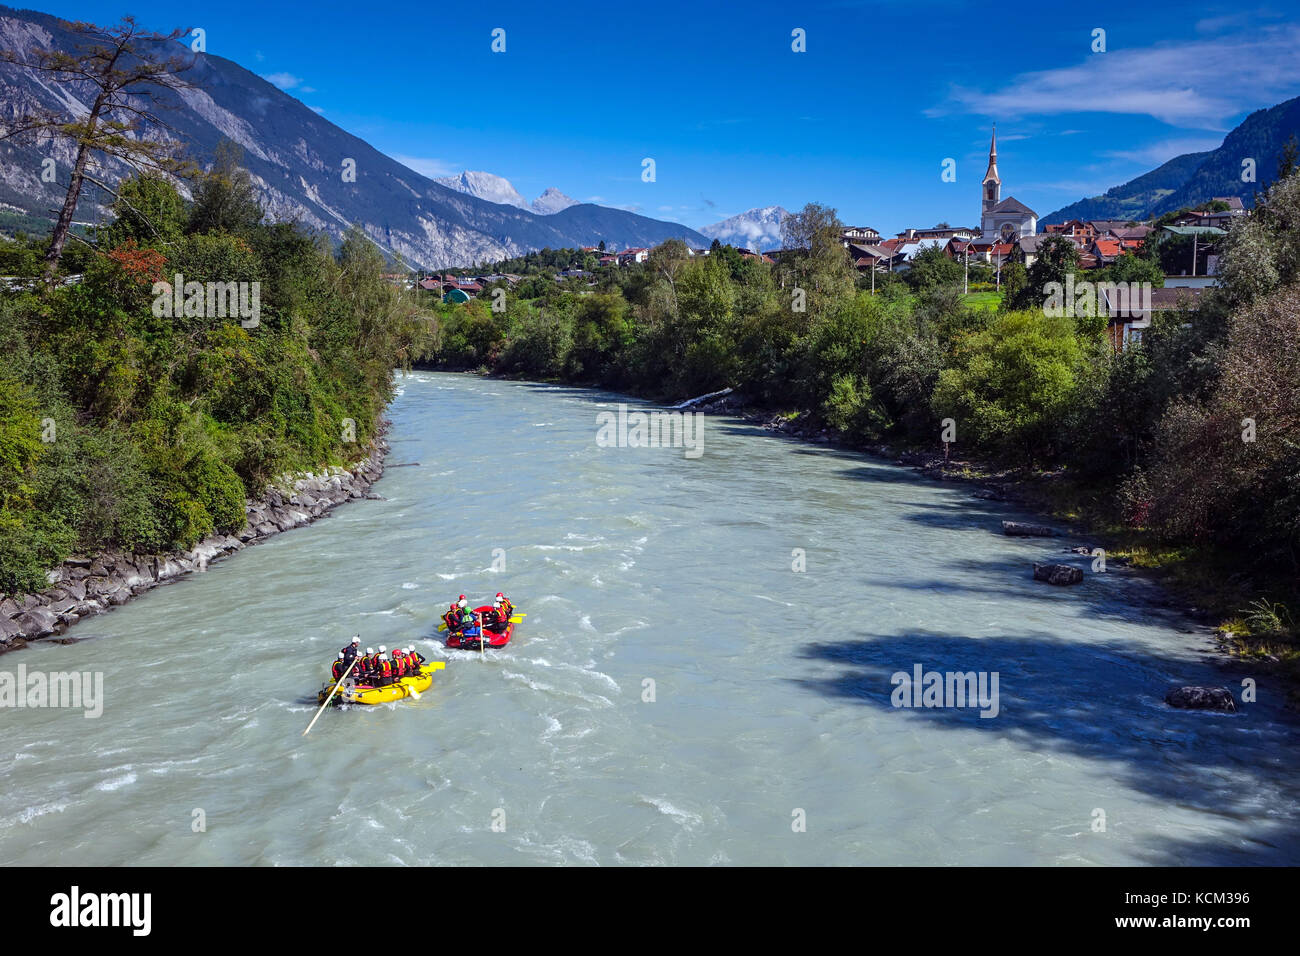 Rafting on the River Inn near Imst, Austria Stock Photo